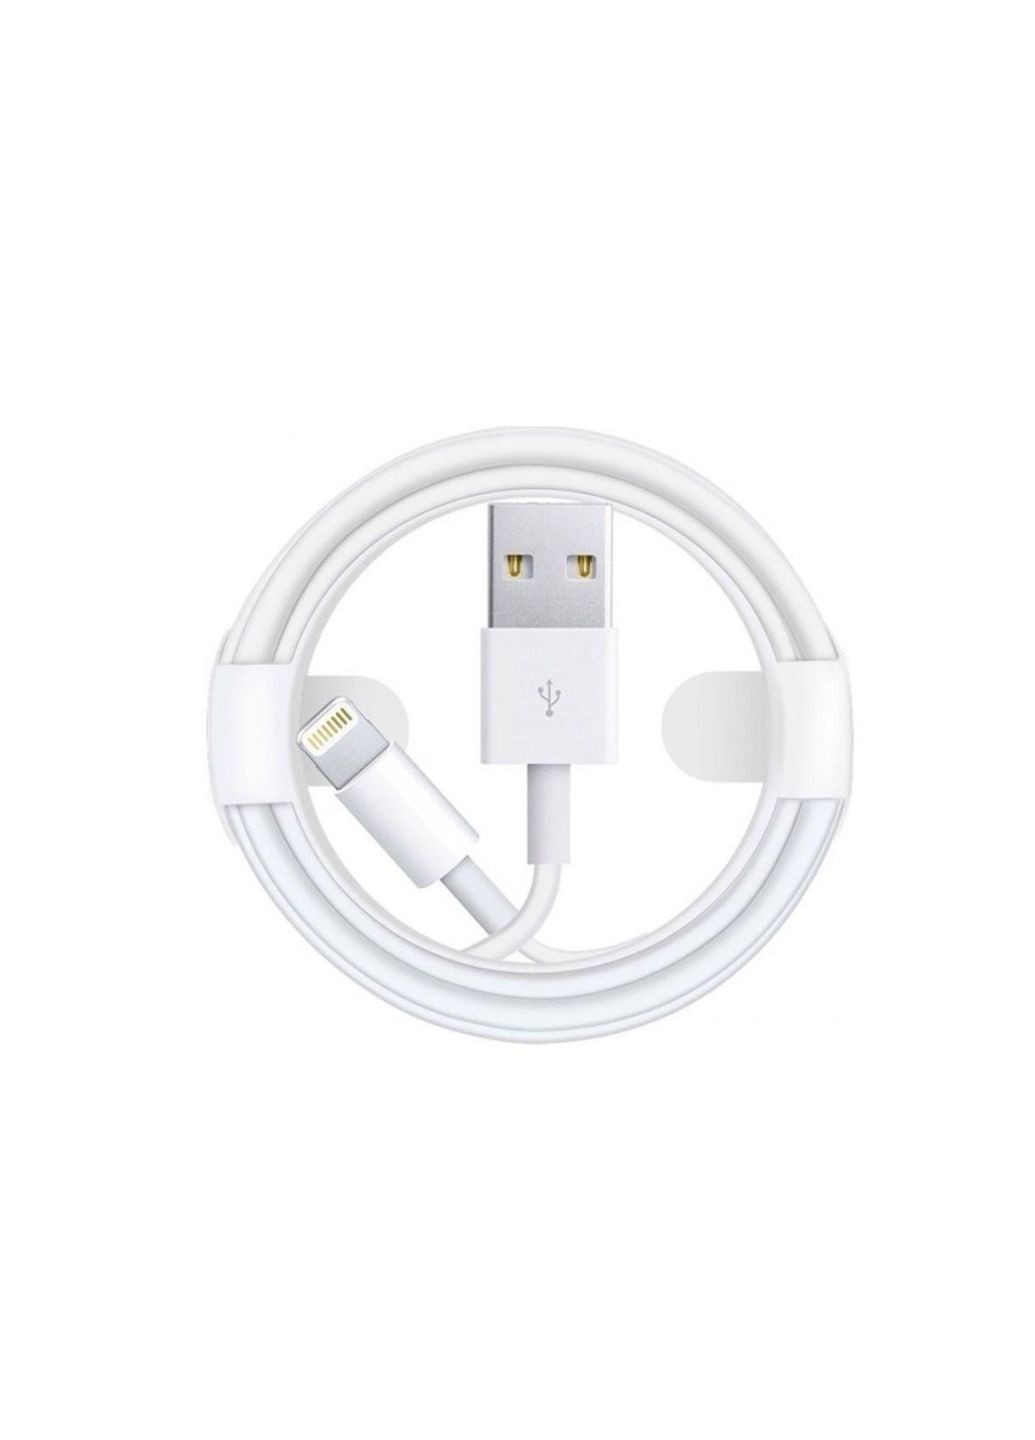 USB кабель Lightning для iPhone 5 6 7 8 1m белый Onyx (279825744)